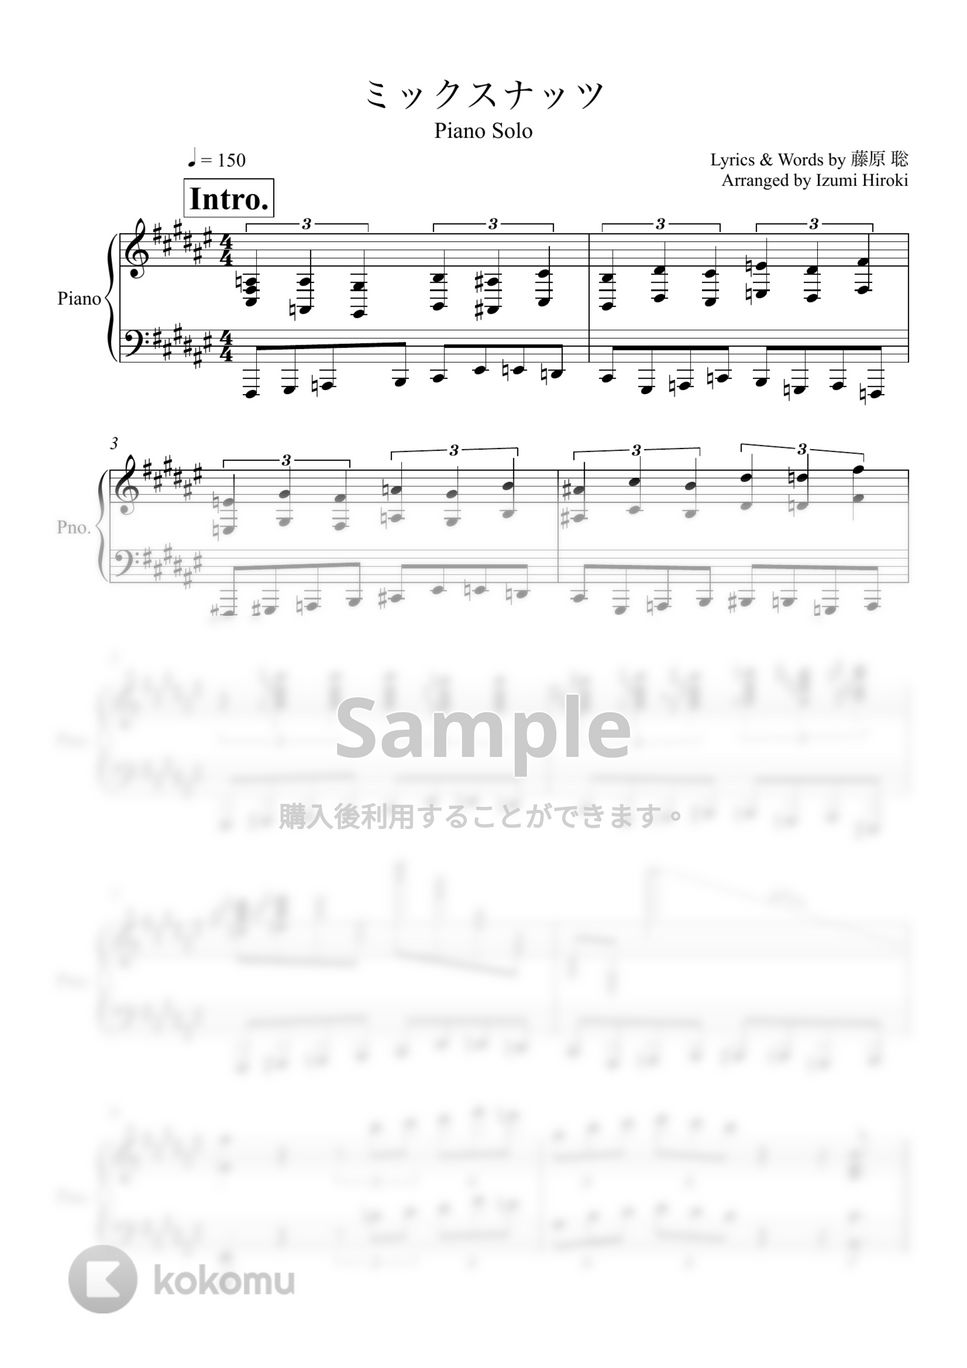 Official髭男dism - ミックスナッツ (ピアノソロ) by 泉宏樹